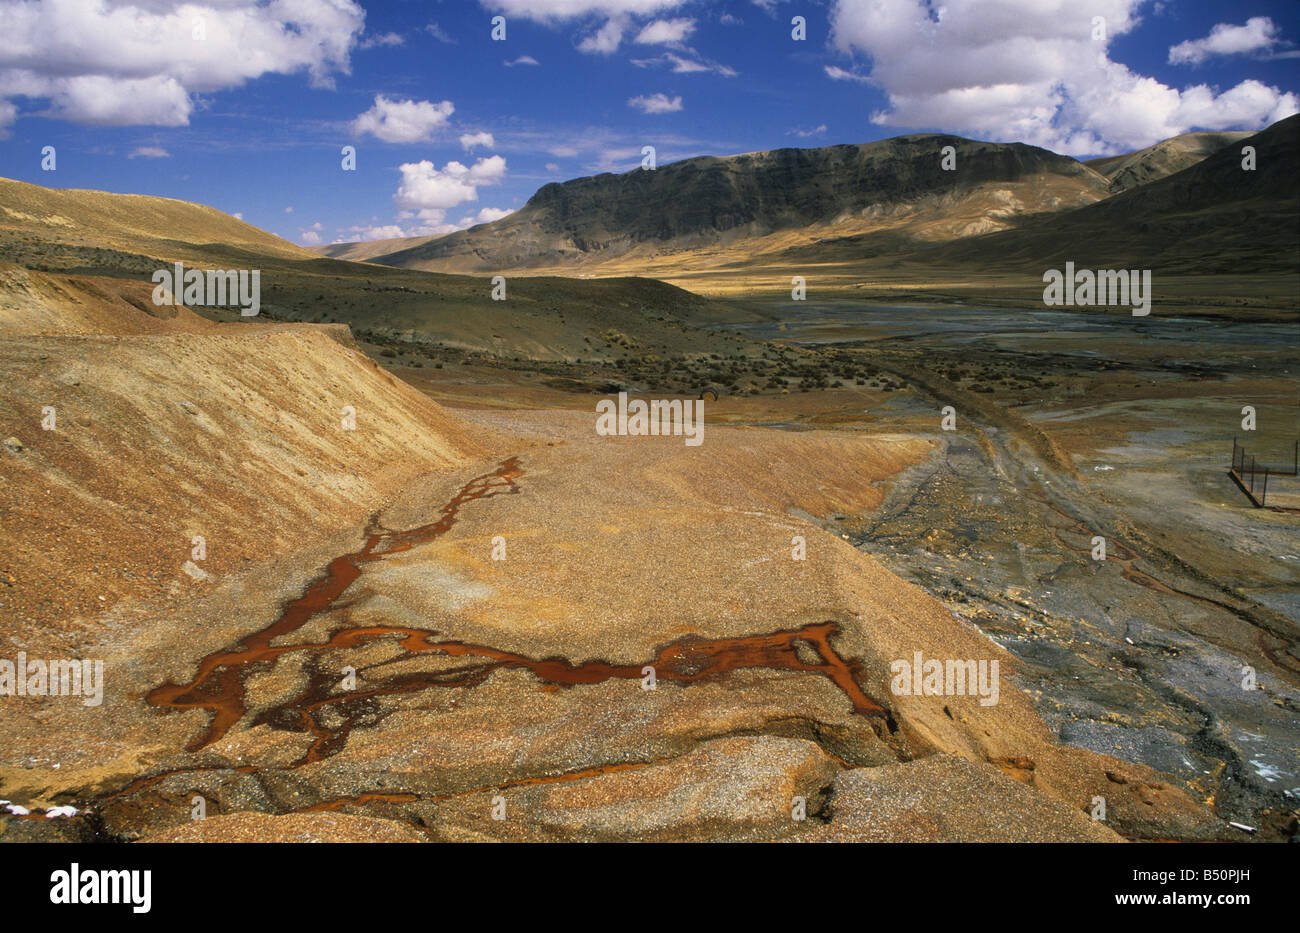 Contaminated from acid mine drainage and industrial waste on tailings dam at former tine mine, Milluni, near La Paz, Bolivia Stock Photo